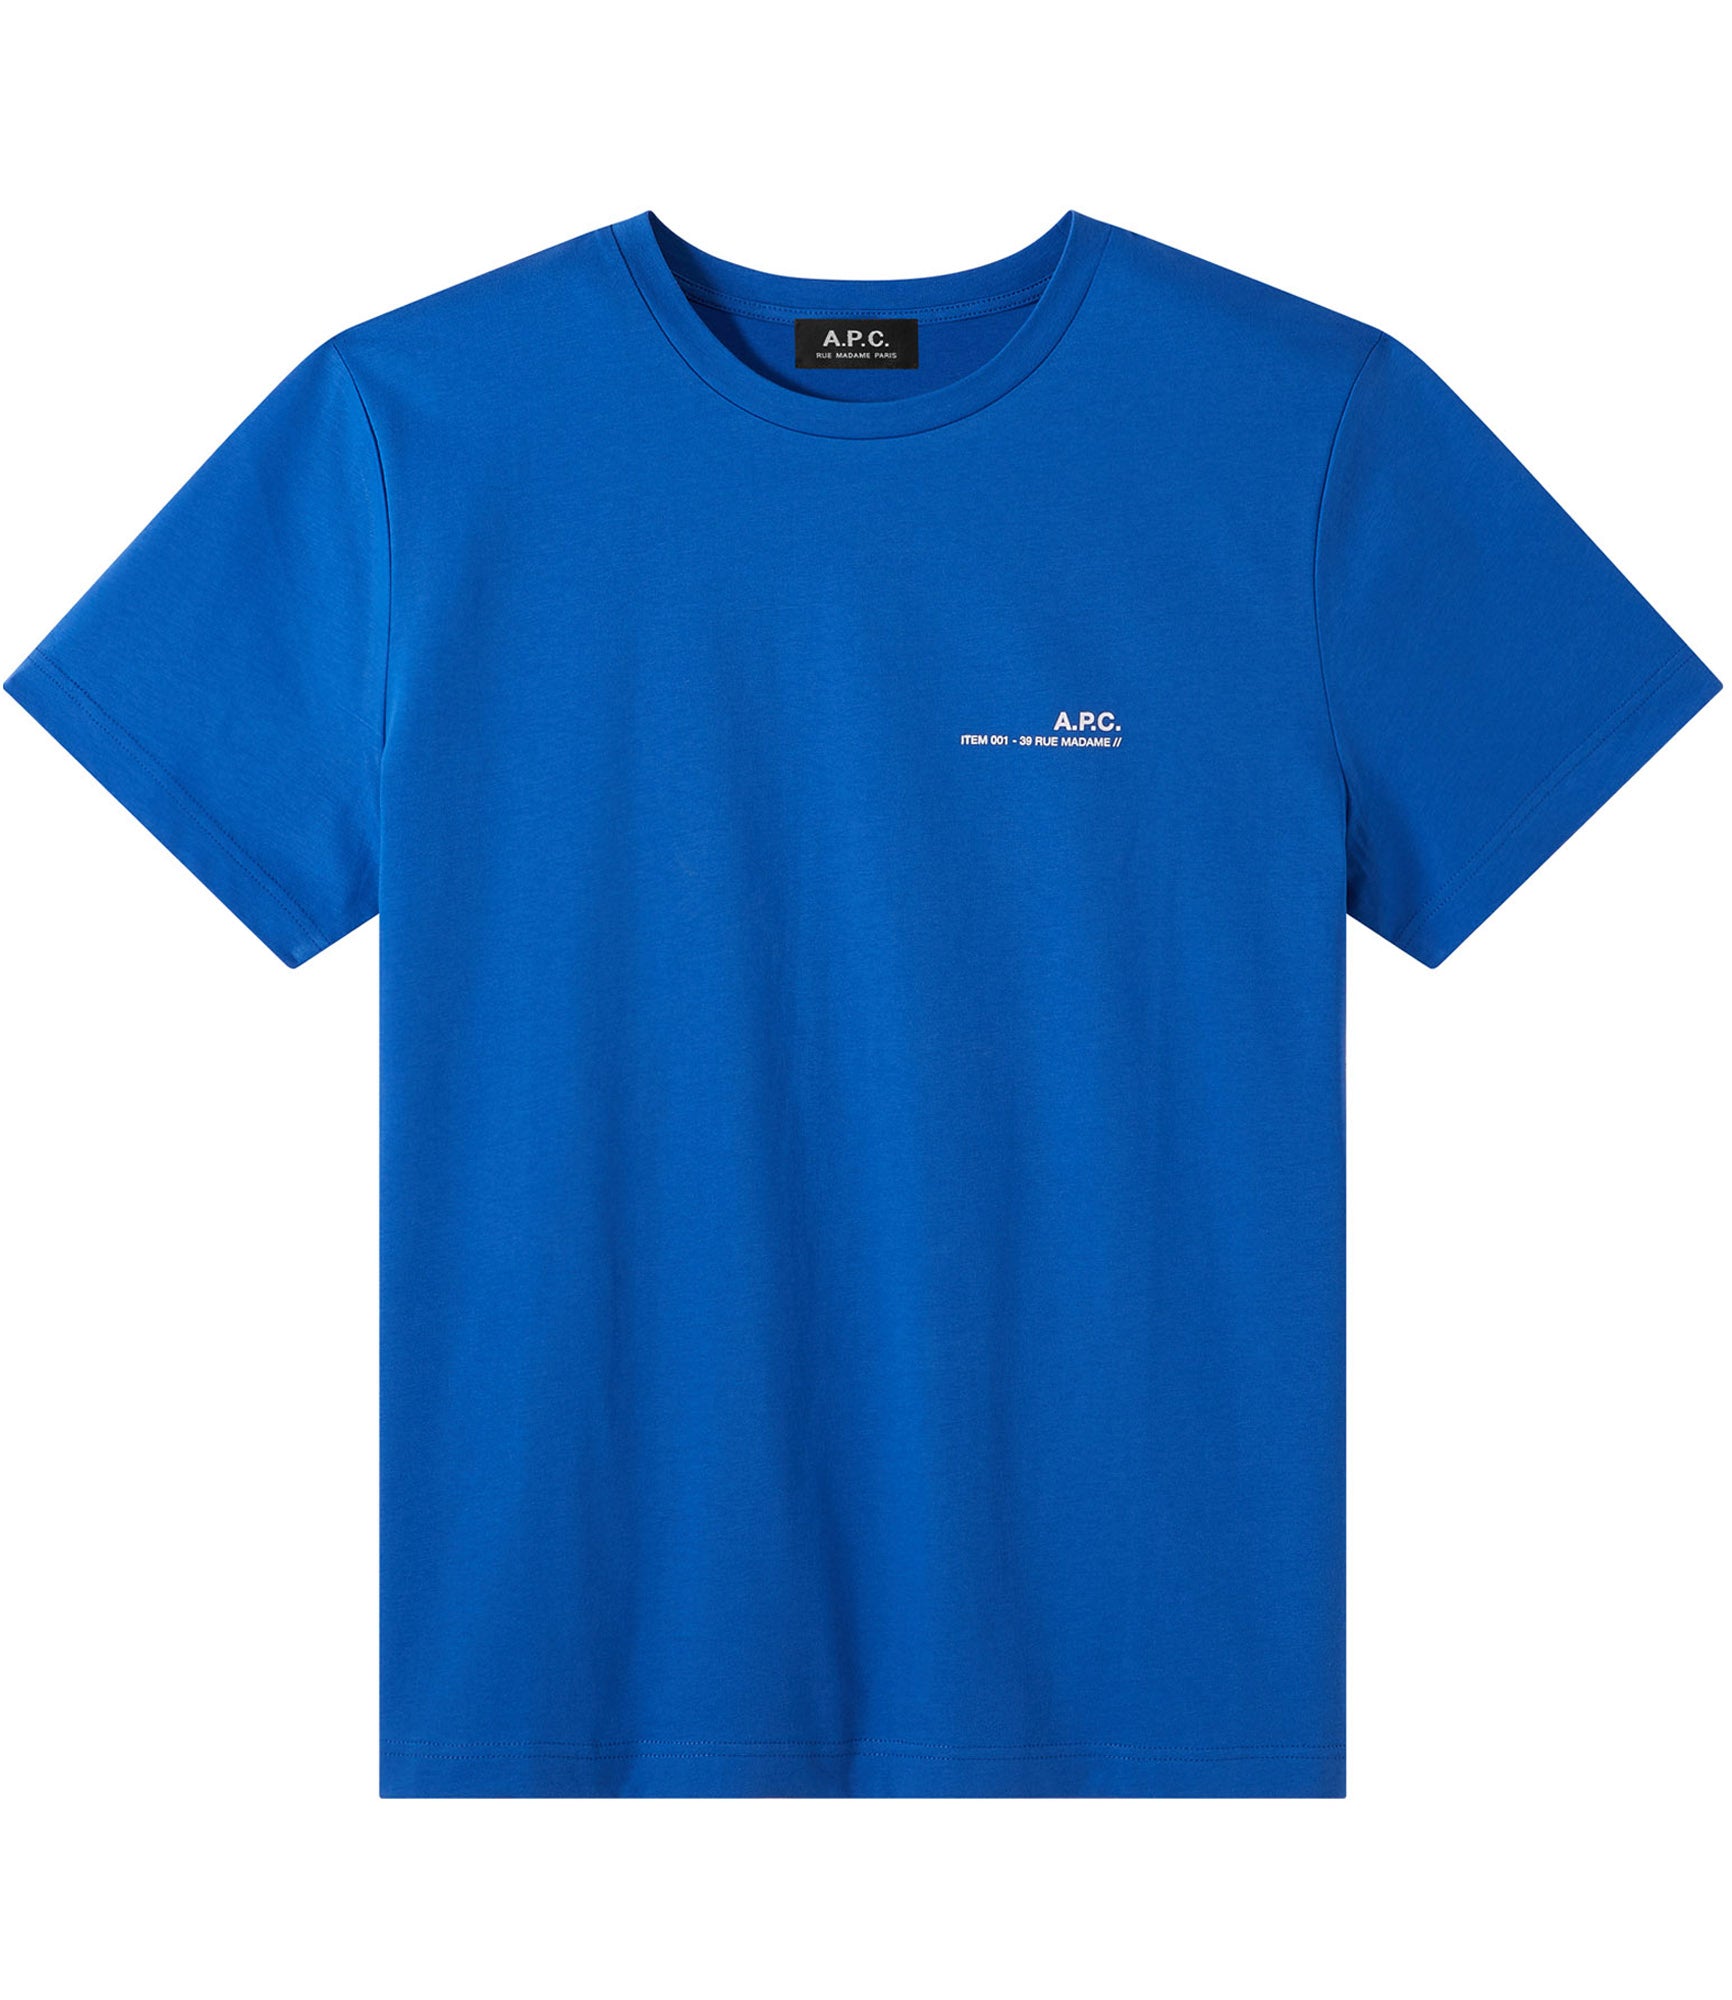 T-shirt item f, cobalt blue